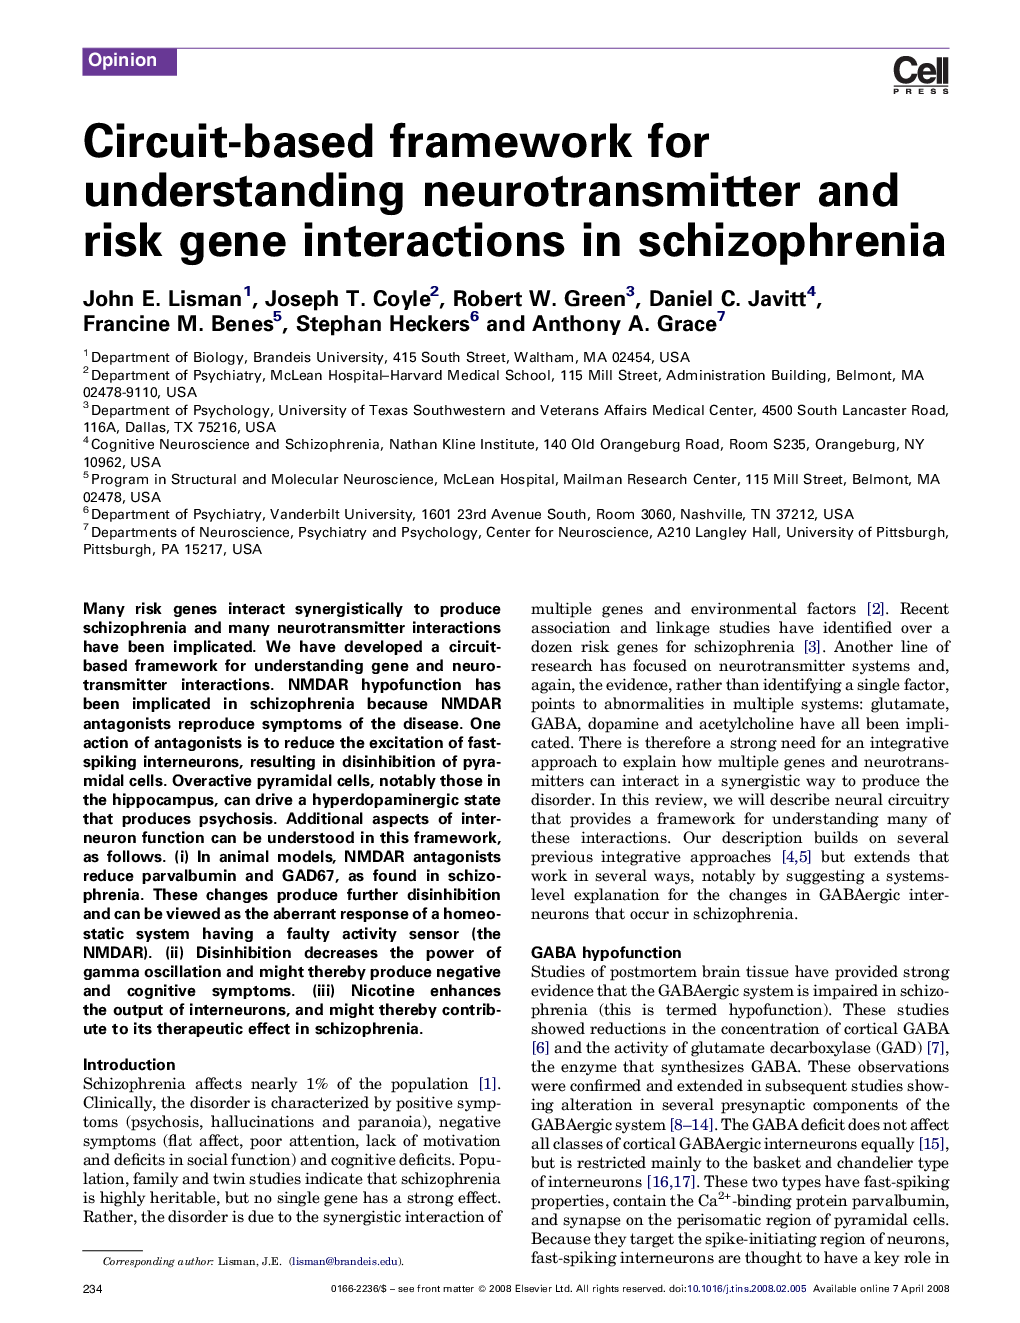 Circuit-based framework for understanding neurotransmitter and risk gene interactions in schizophrenia